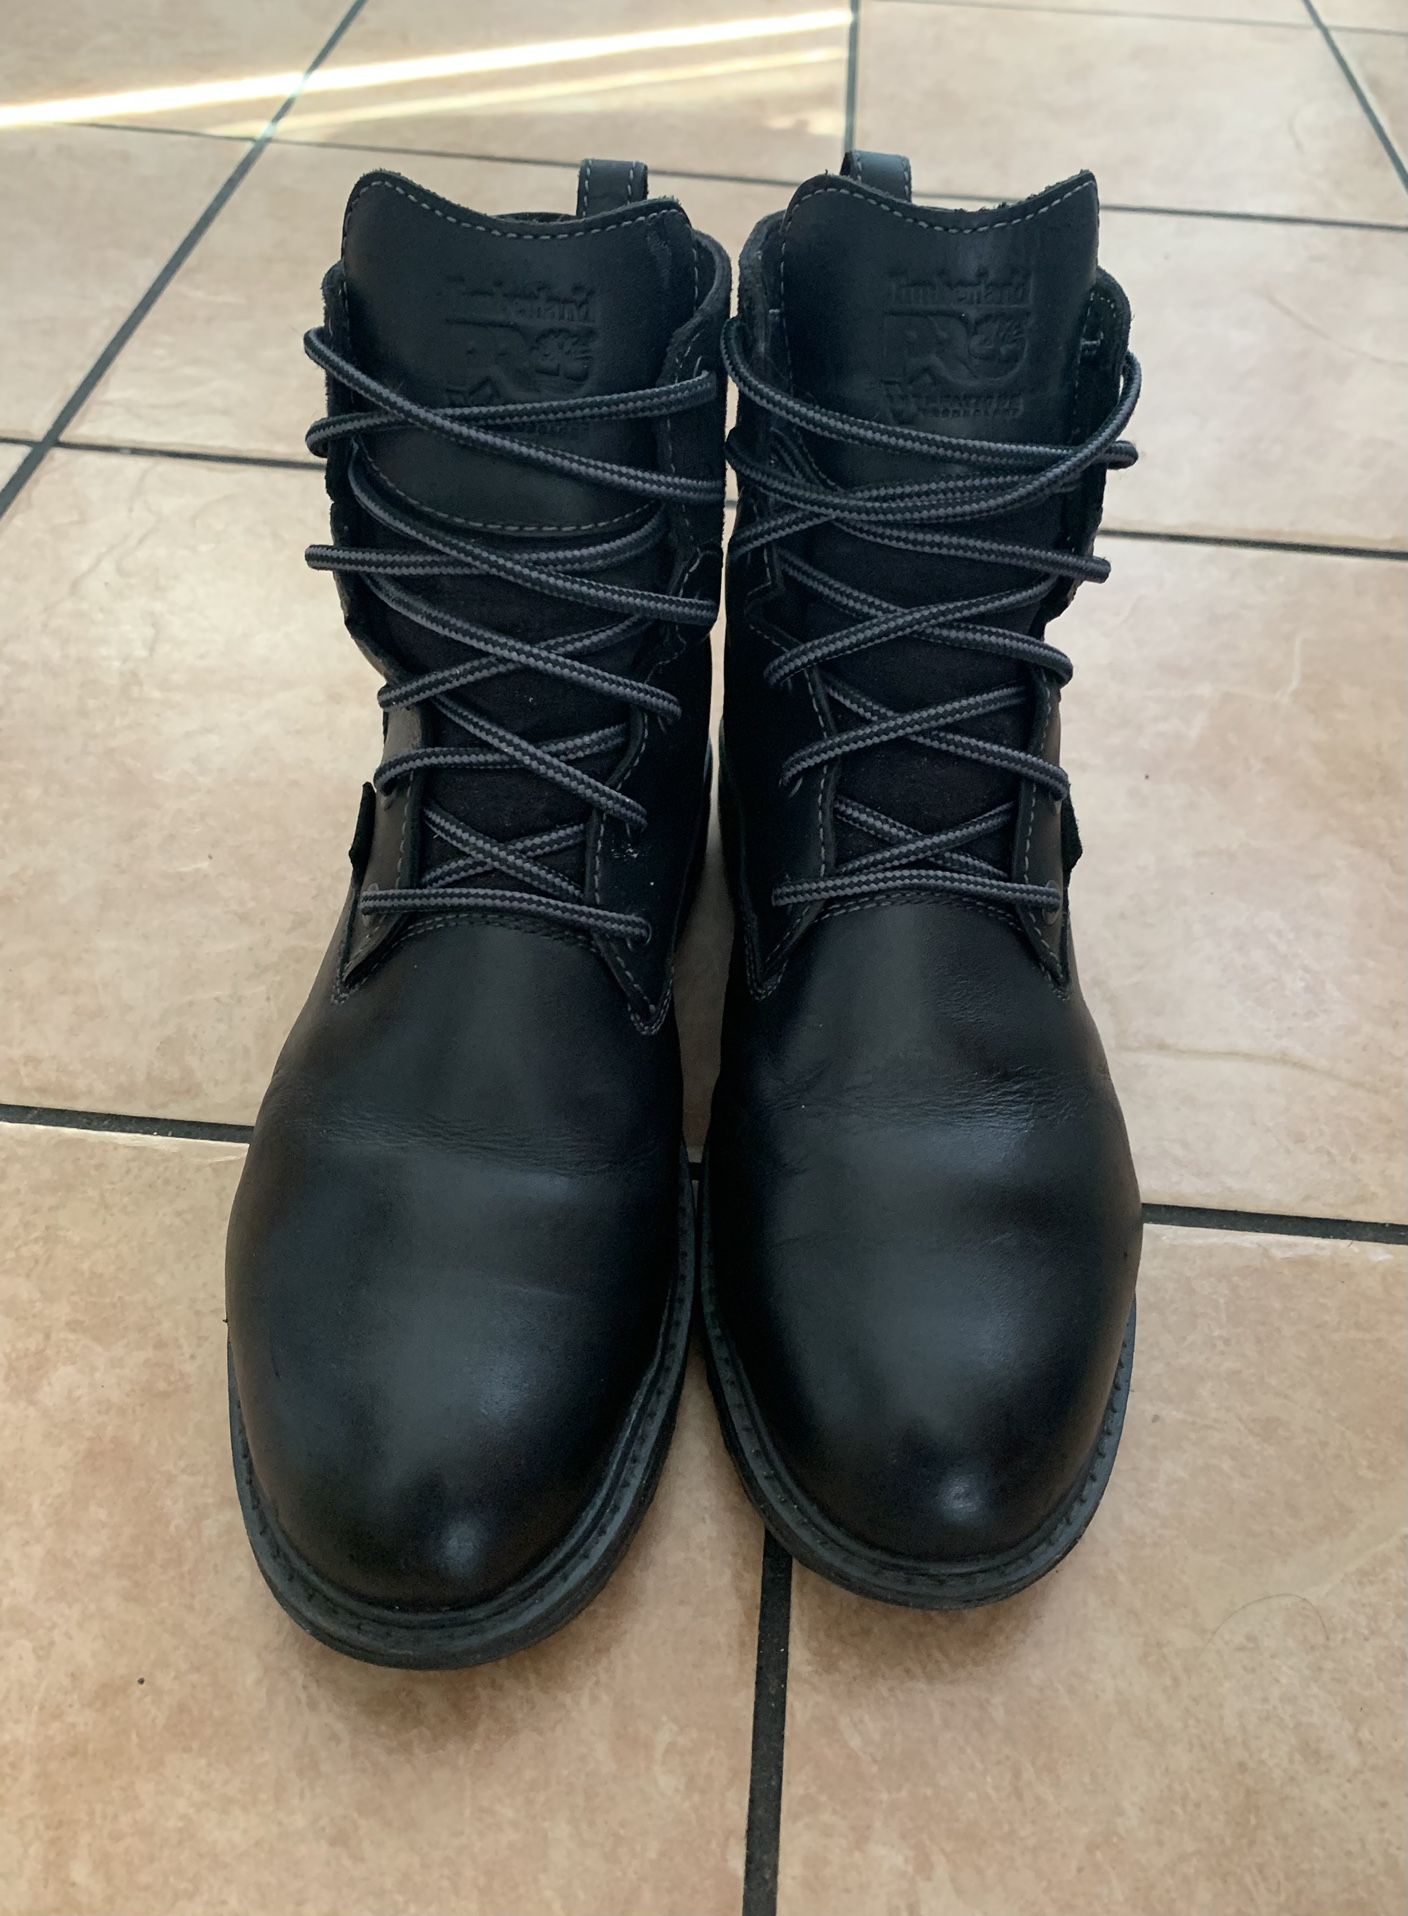 Timberland Pro Woman’s Boots